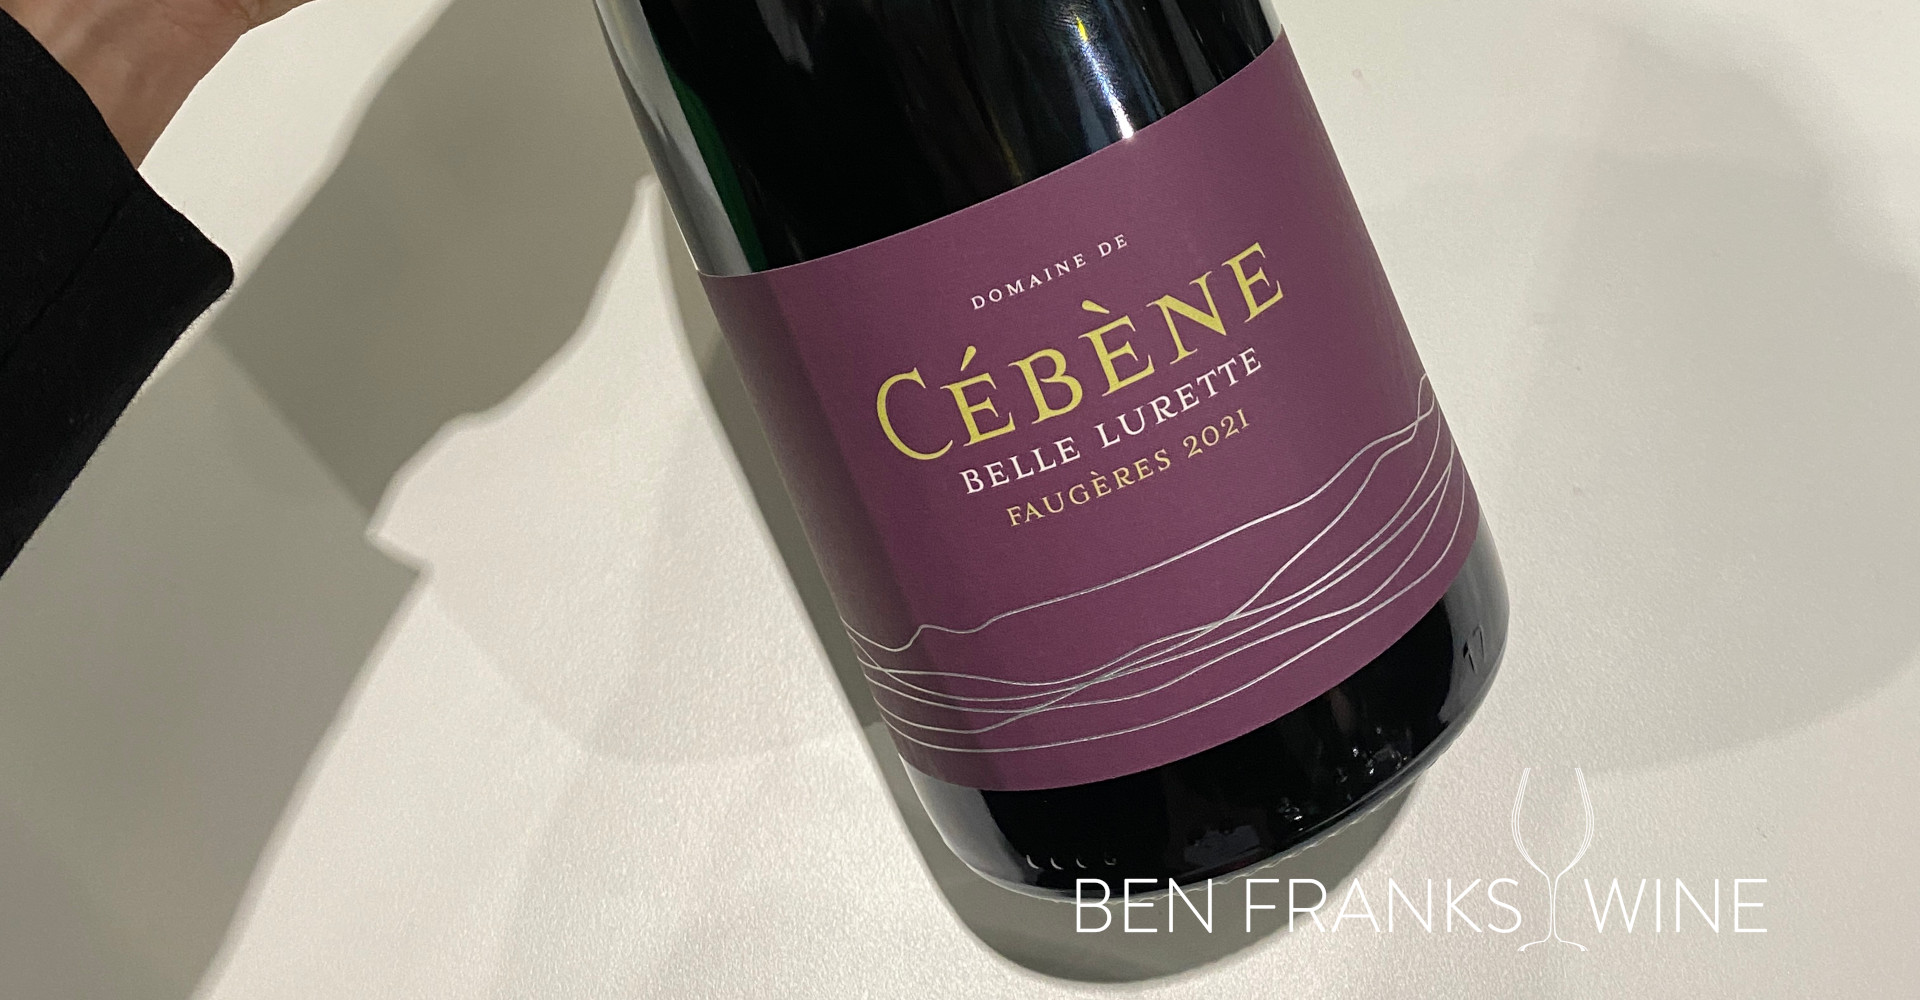 Domaine de Cebene organic red wine from France